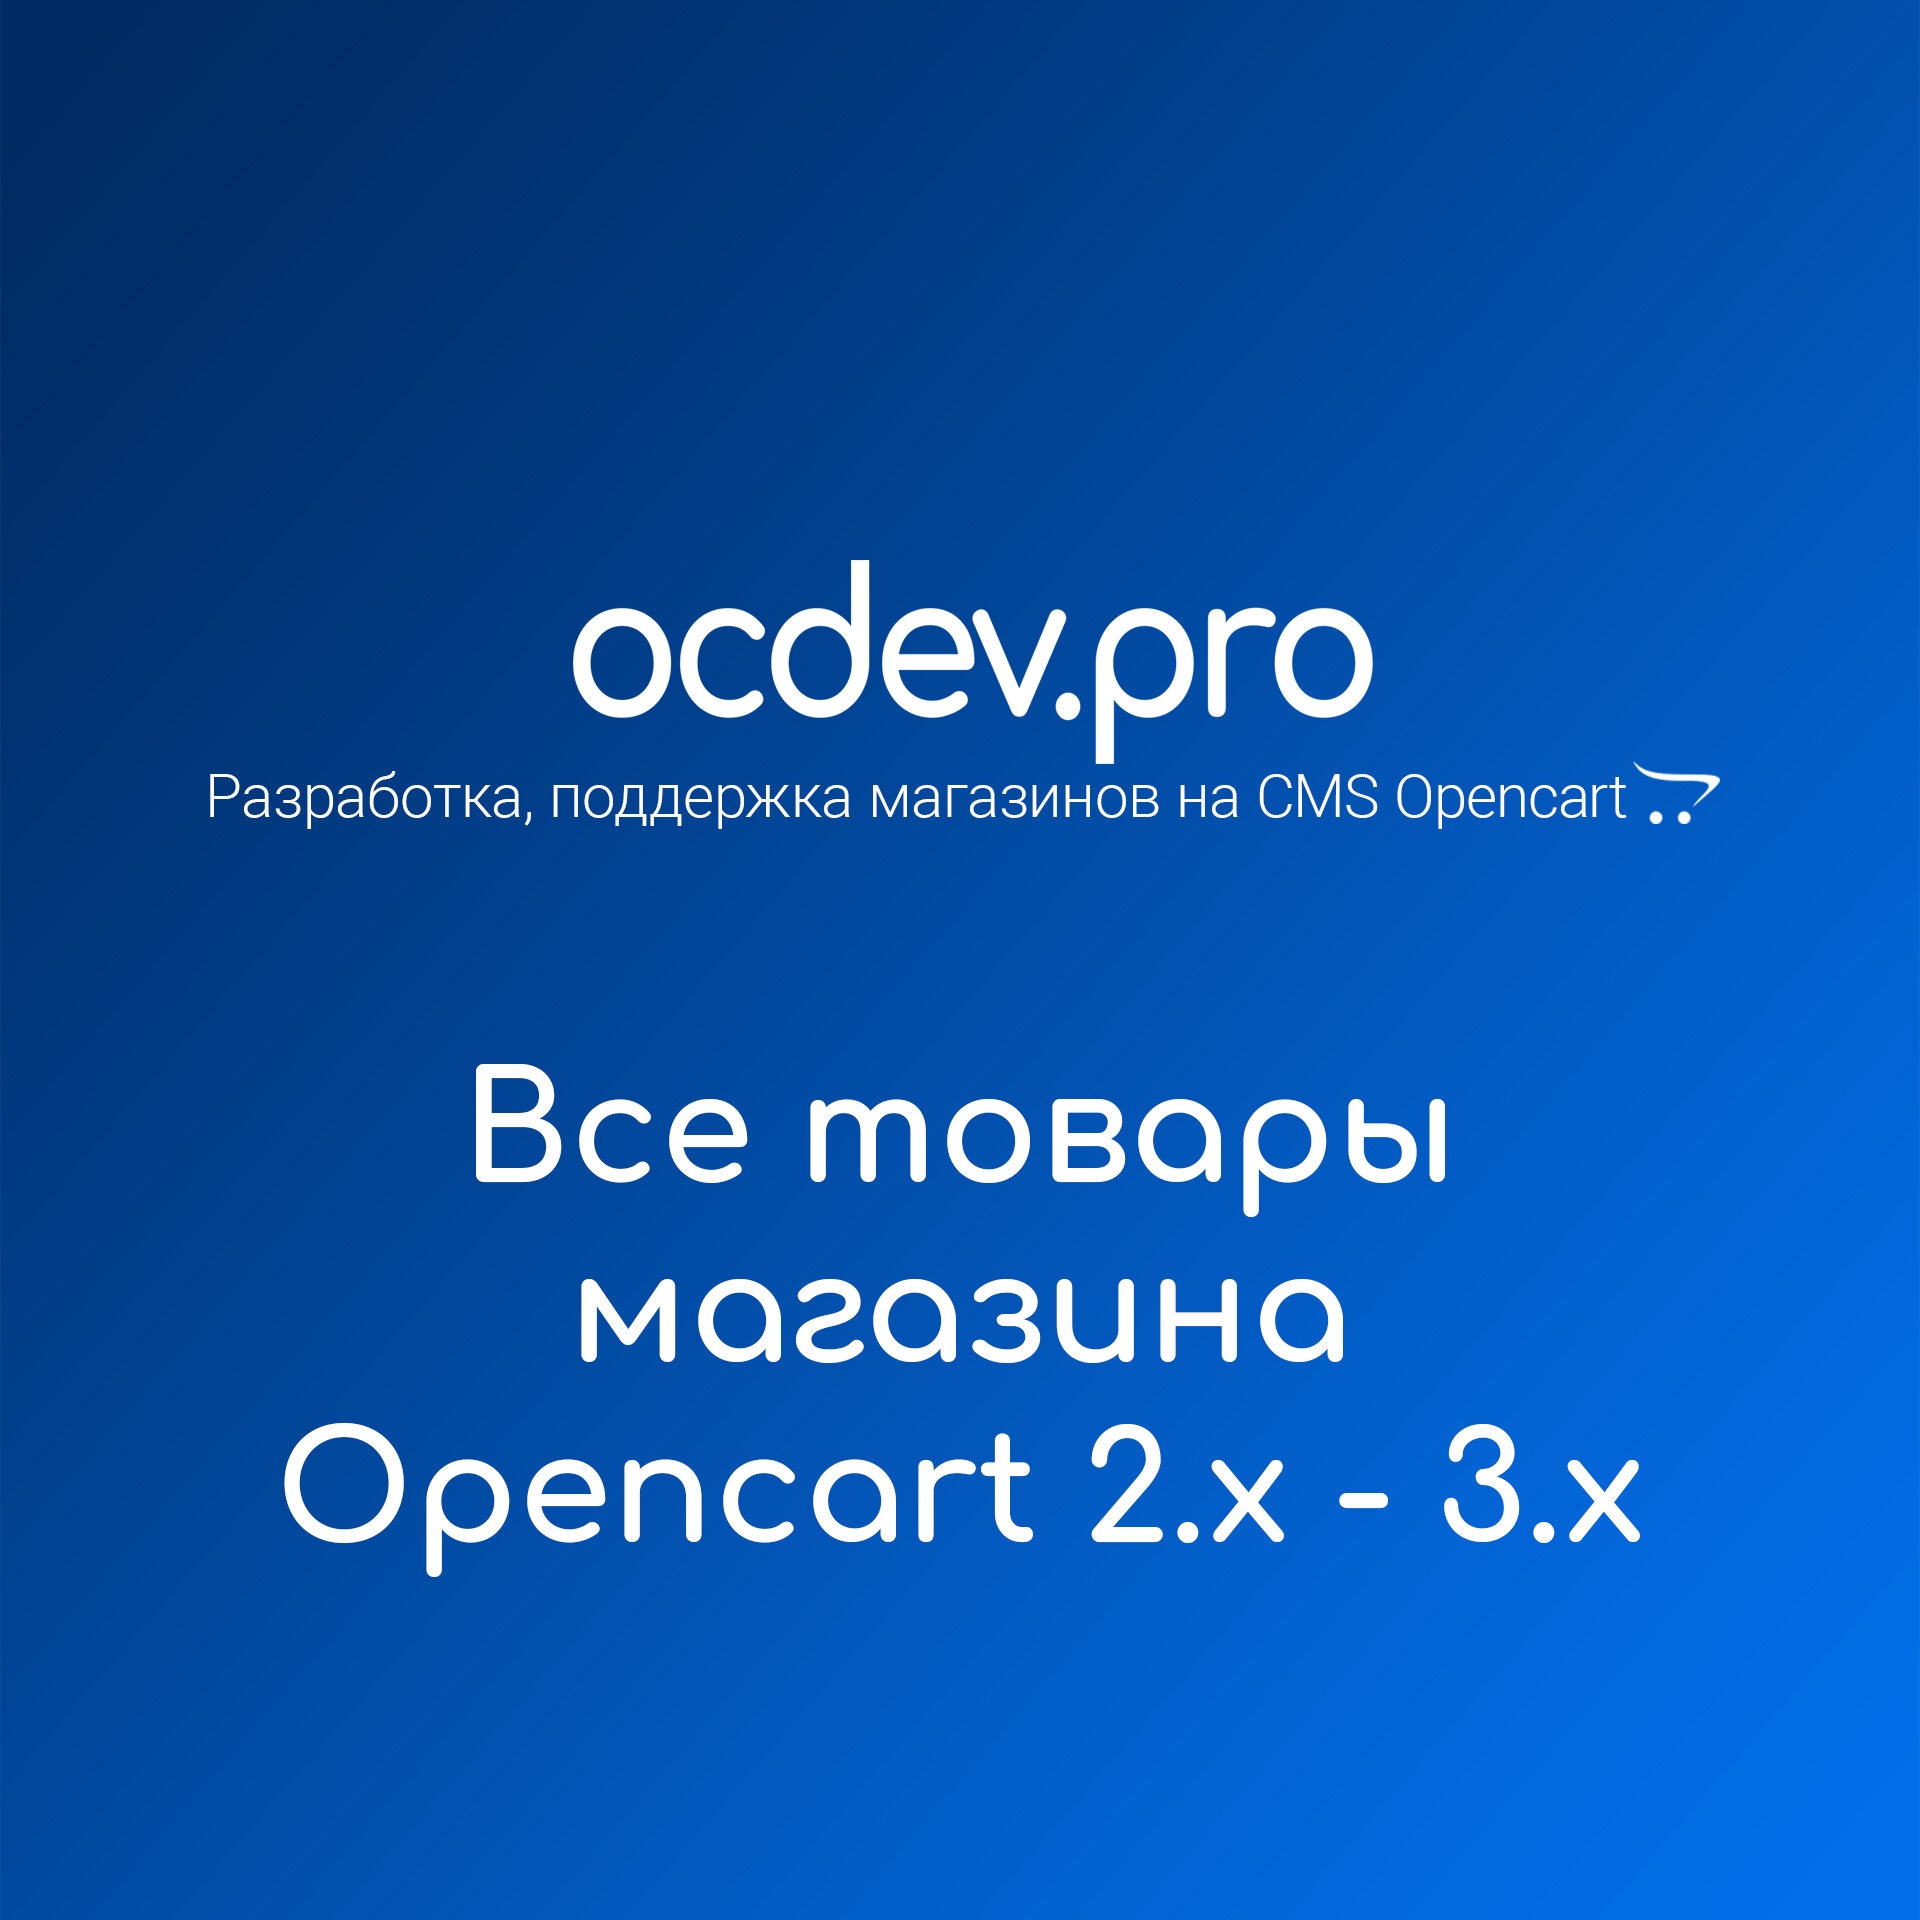 OCDEV.pro - Все товары магазина Opencart 2.x - 3.x